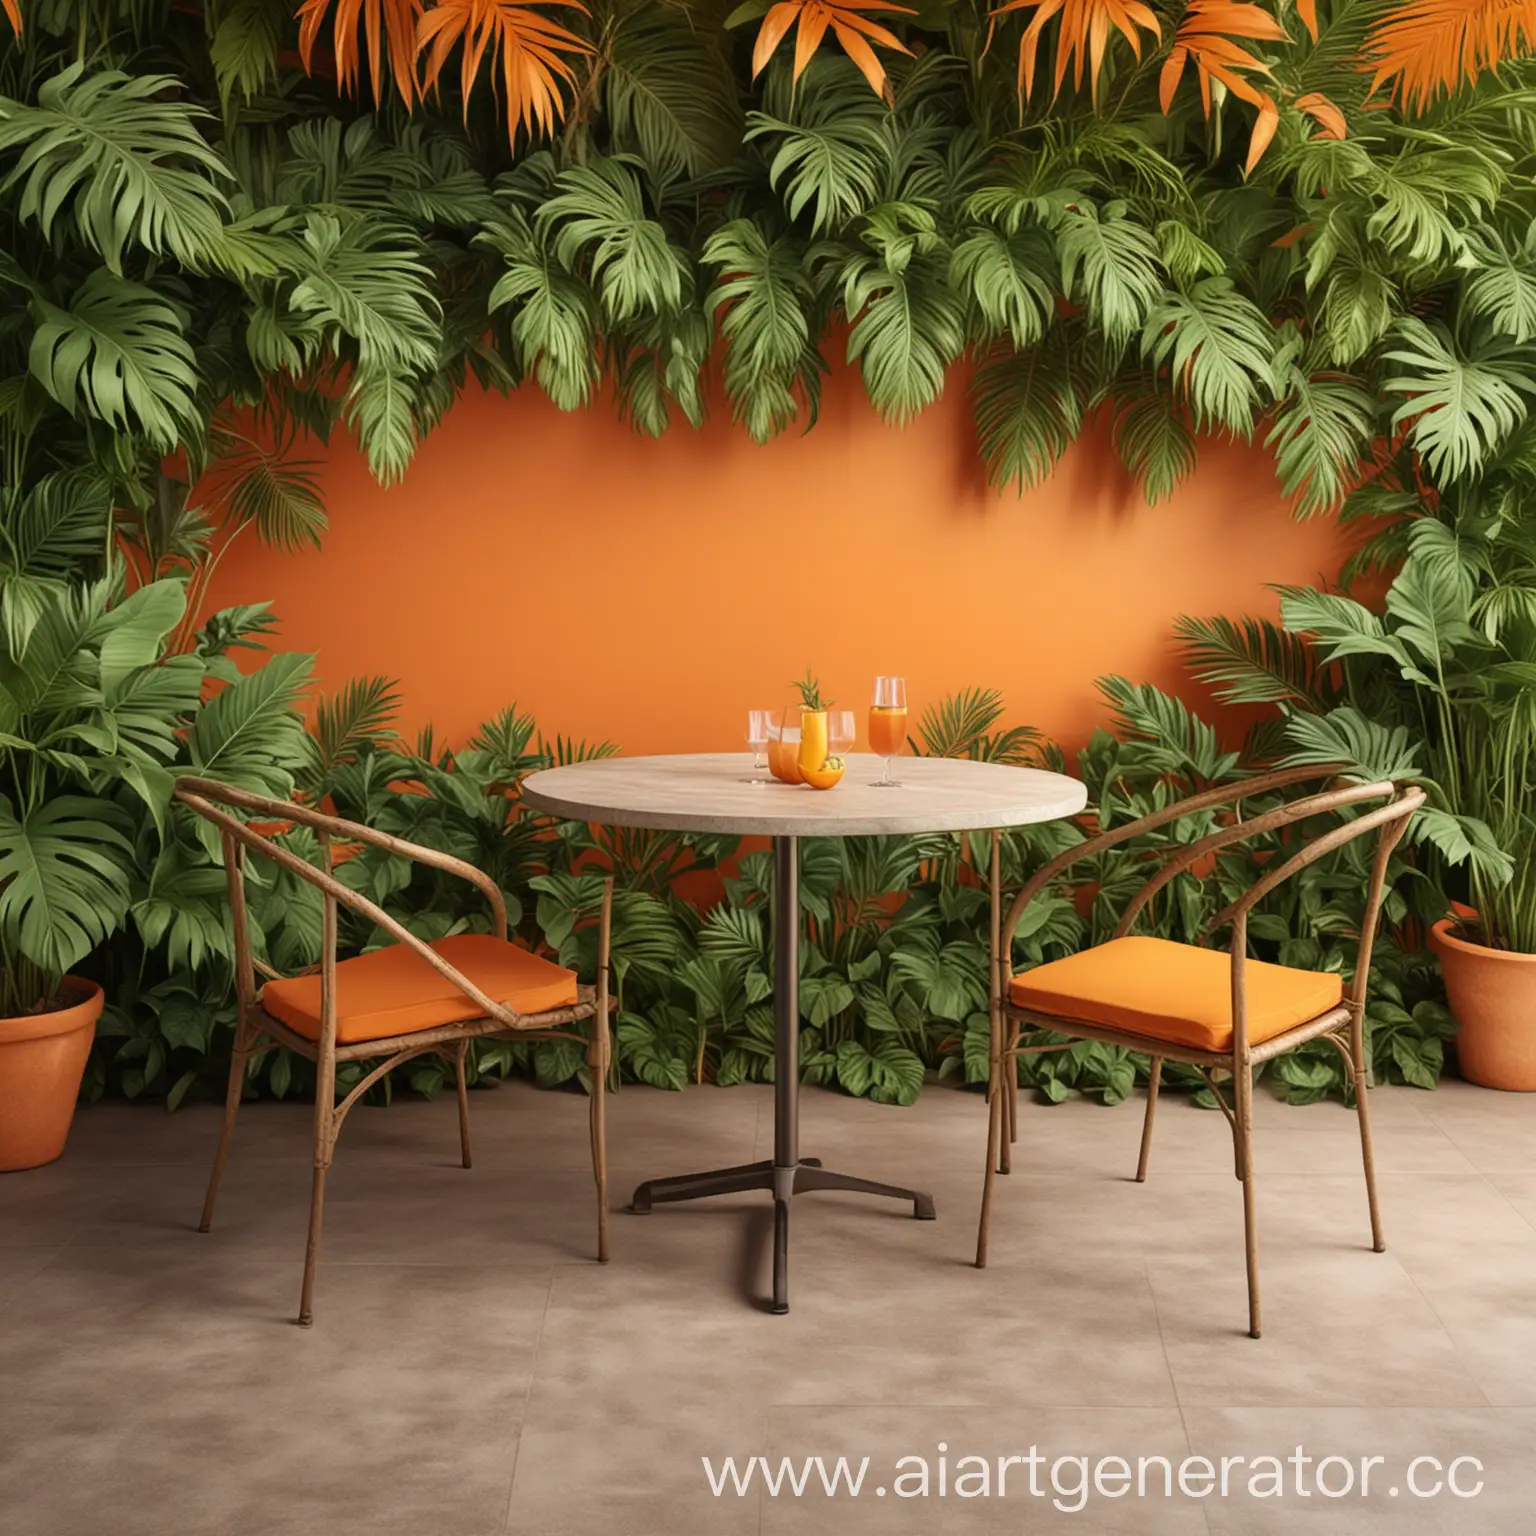 Tropical-Summer-Terrace-Restaurant-Scene-with-Vibrant-Orange-Gradient-Table-Setting